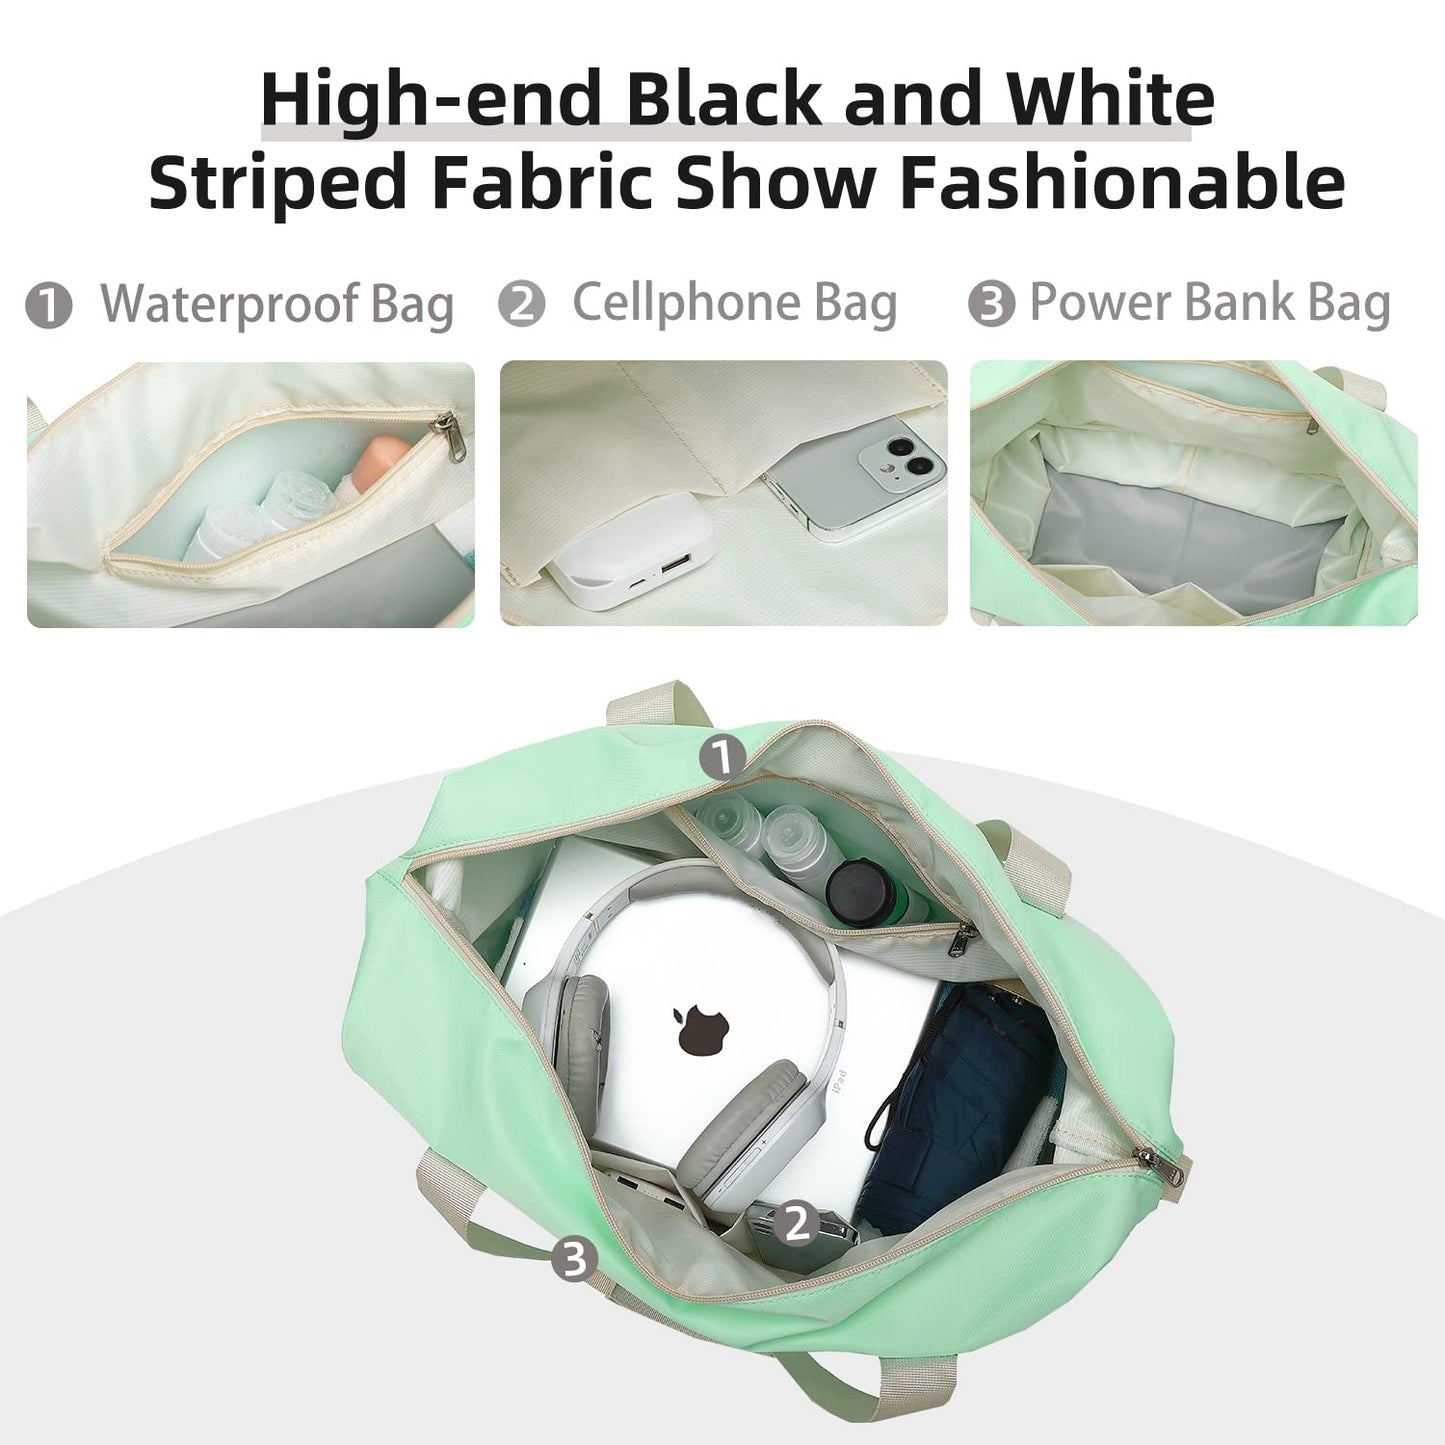 imiomo Travel Gym Duffel Bag - Weekender Bags for Women, Large Tote Overnight Bag, Sports Shoulder Hospital Bag, Light Green, One Size, Travel Bag